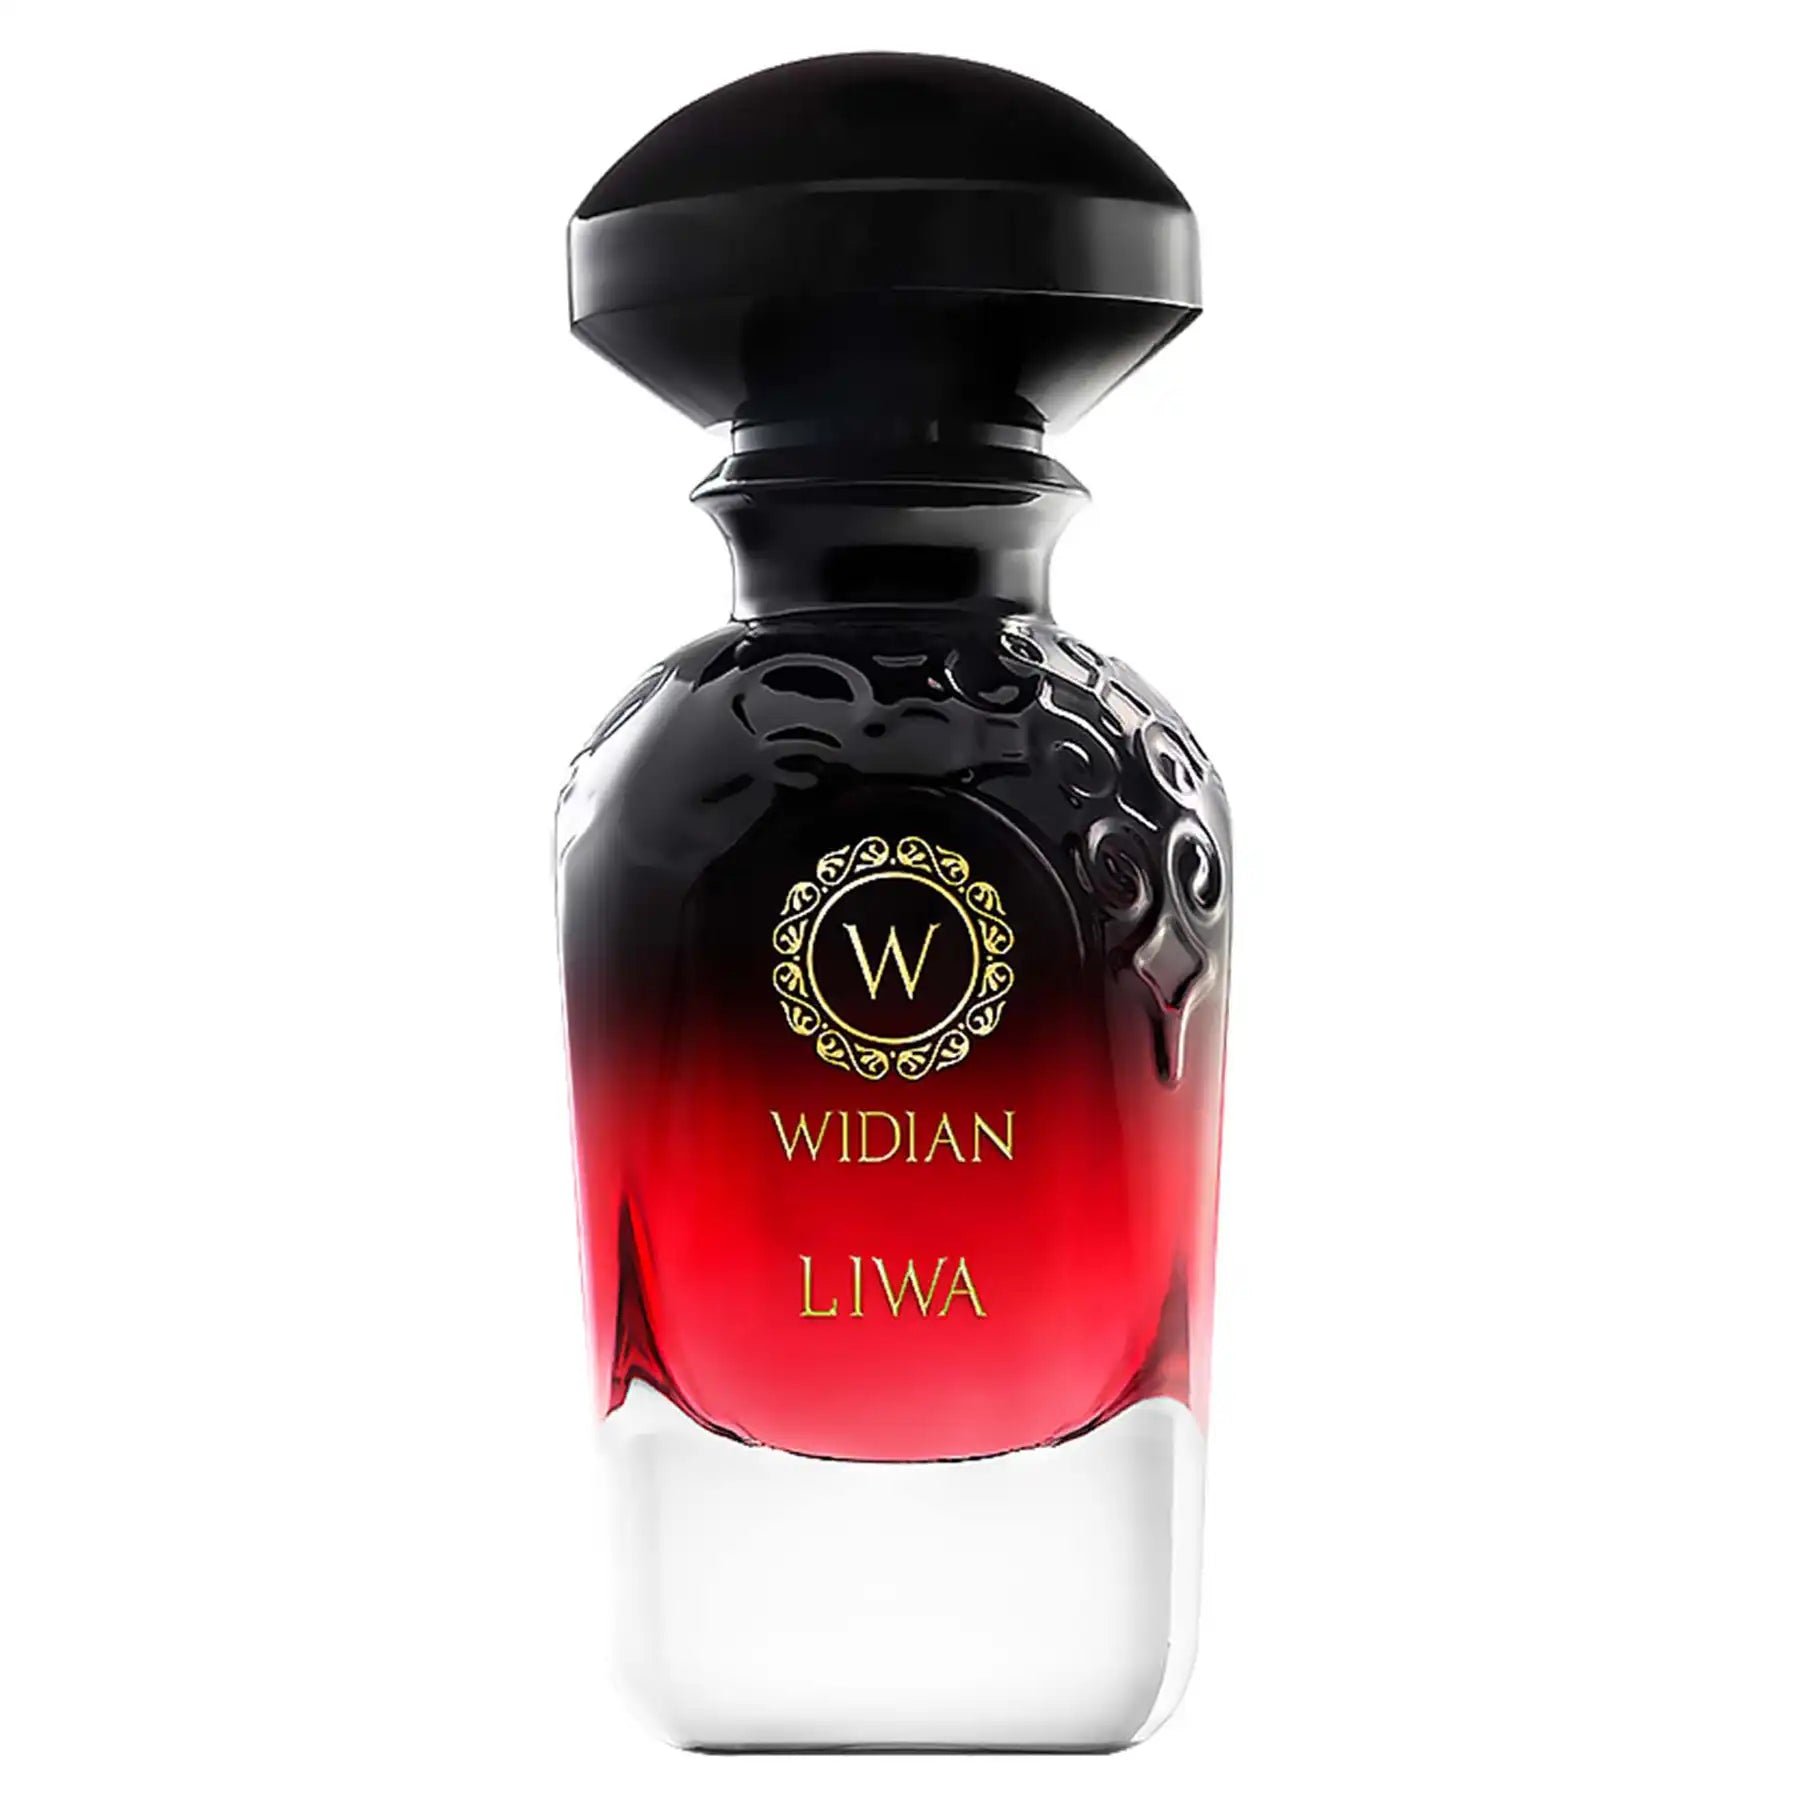 Widian Liwa Extrait de Parfum 50ml